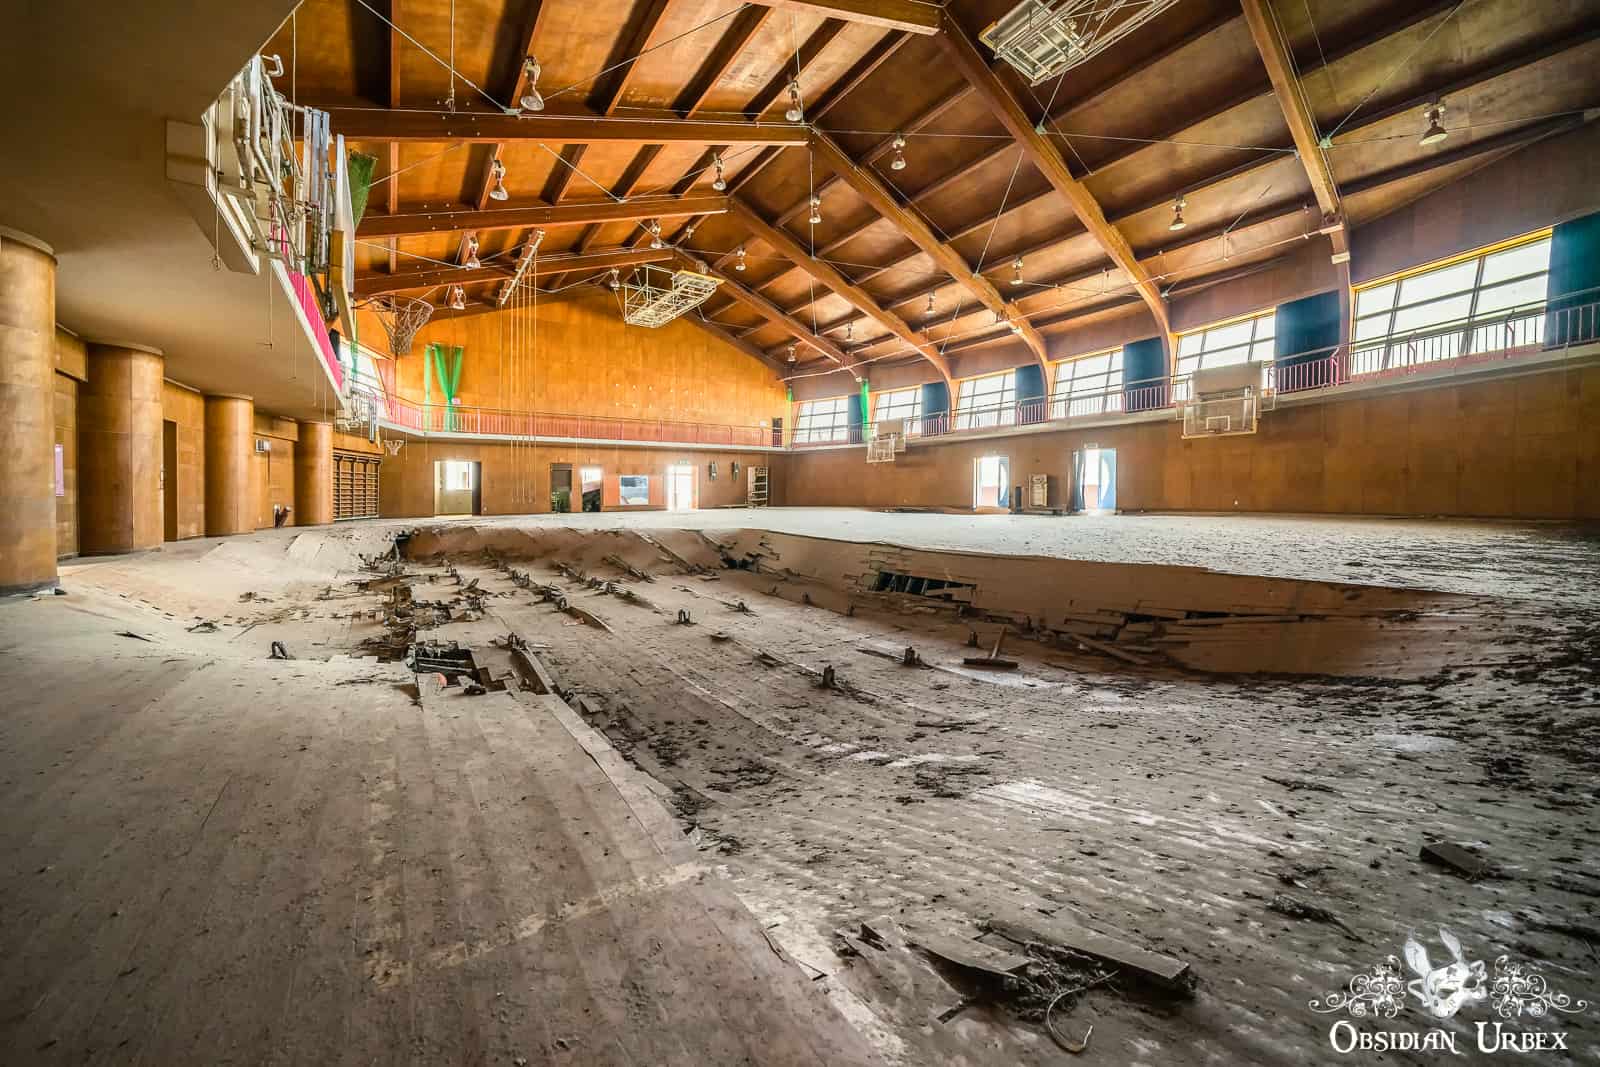 fukushima-school-ruins-japan-sports-hall-gym-floor-damaged-by-2011-great-tsunami